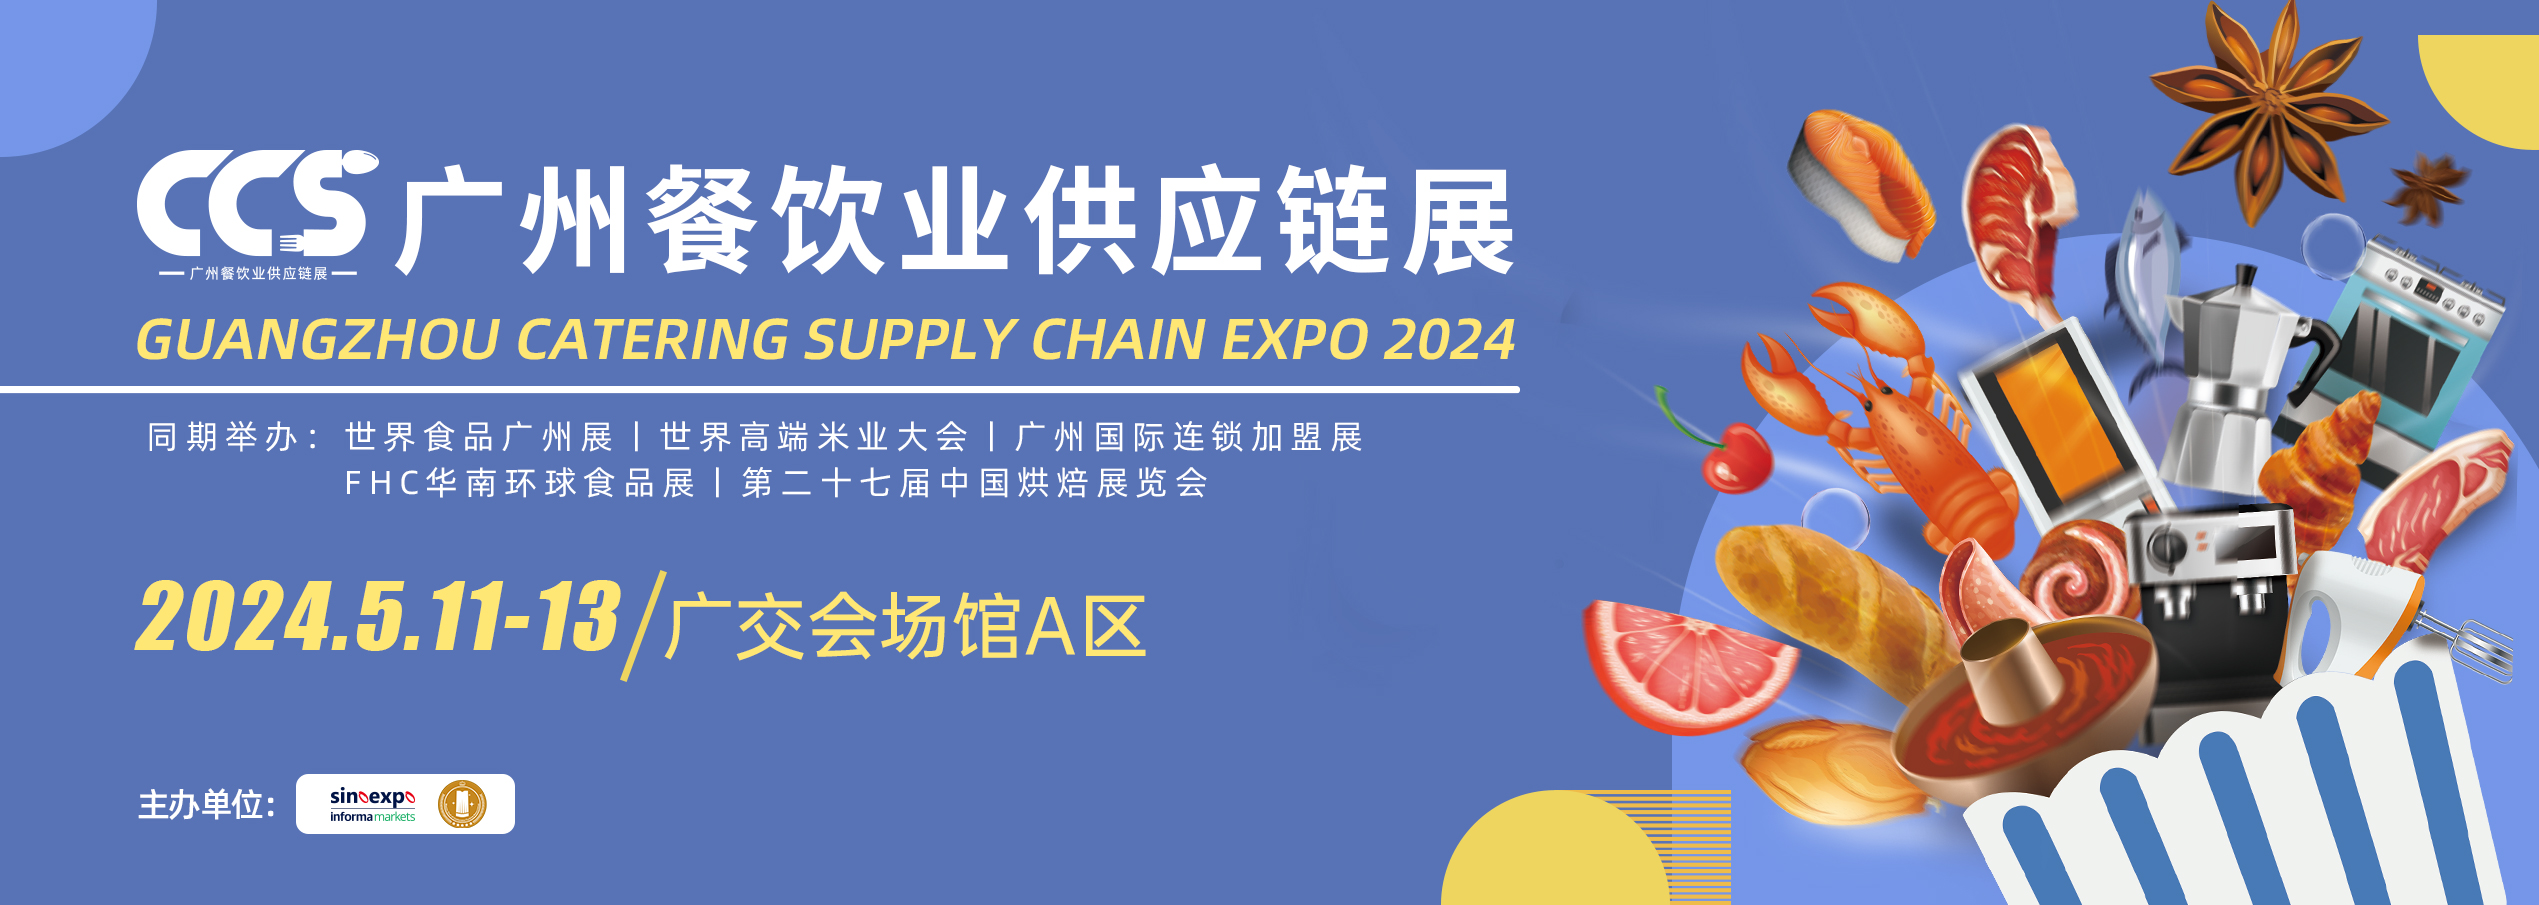 2023供应链官网banner